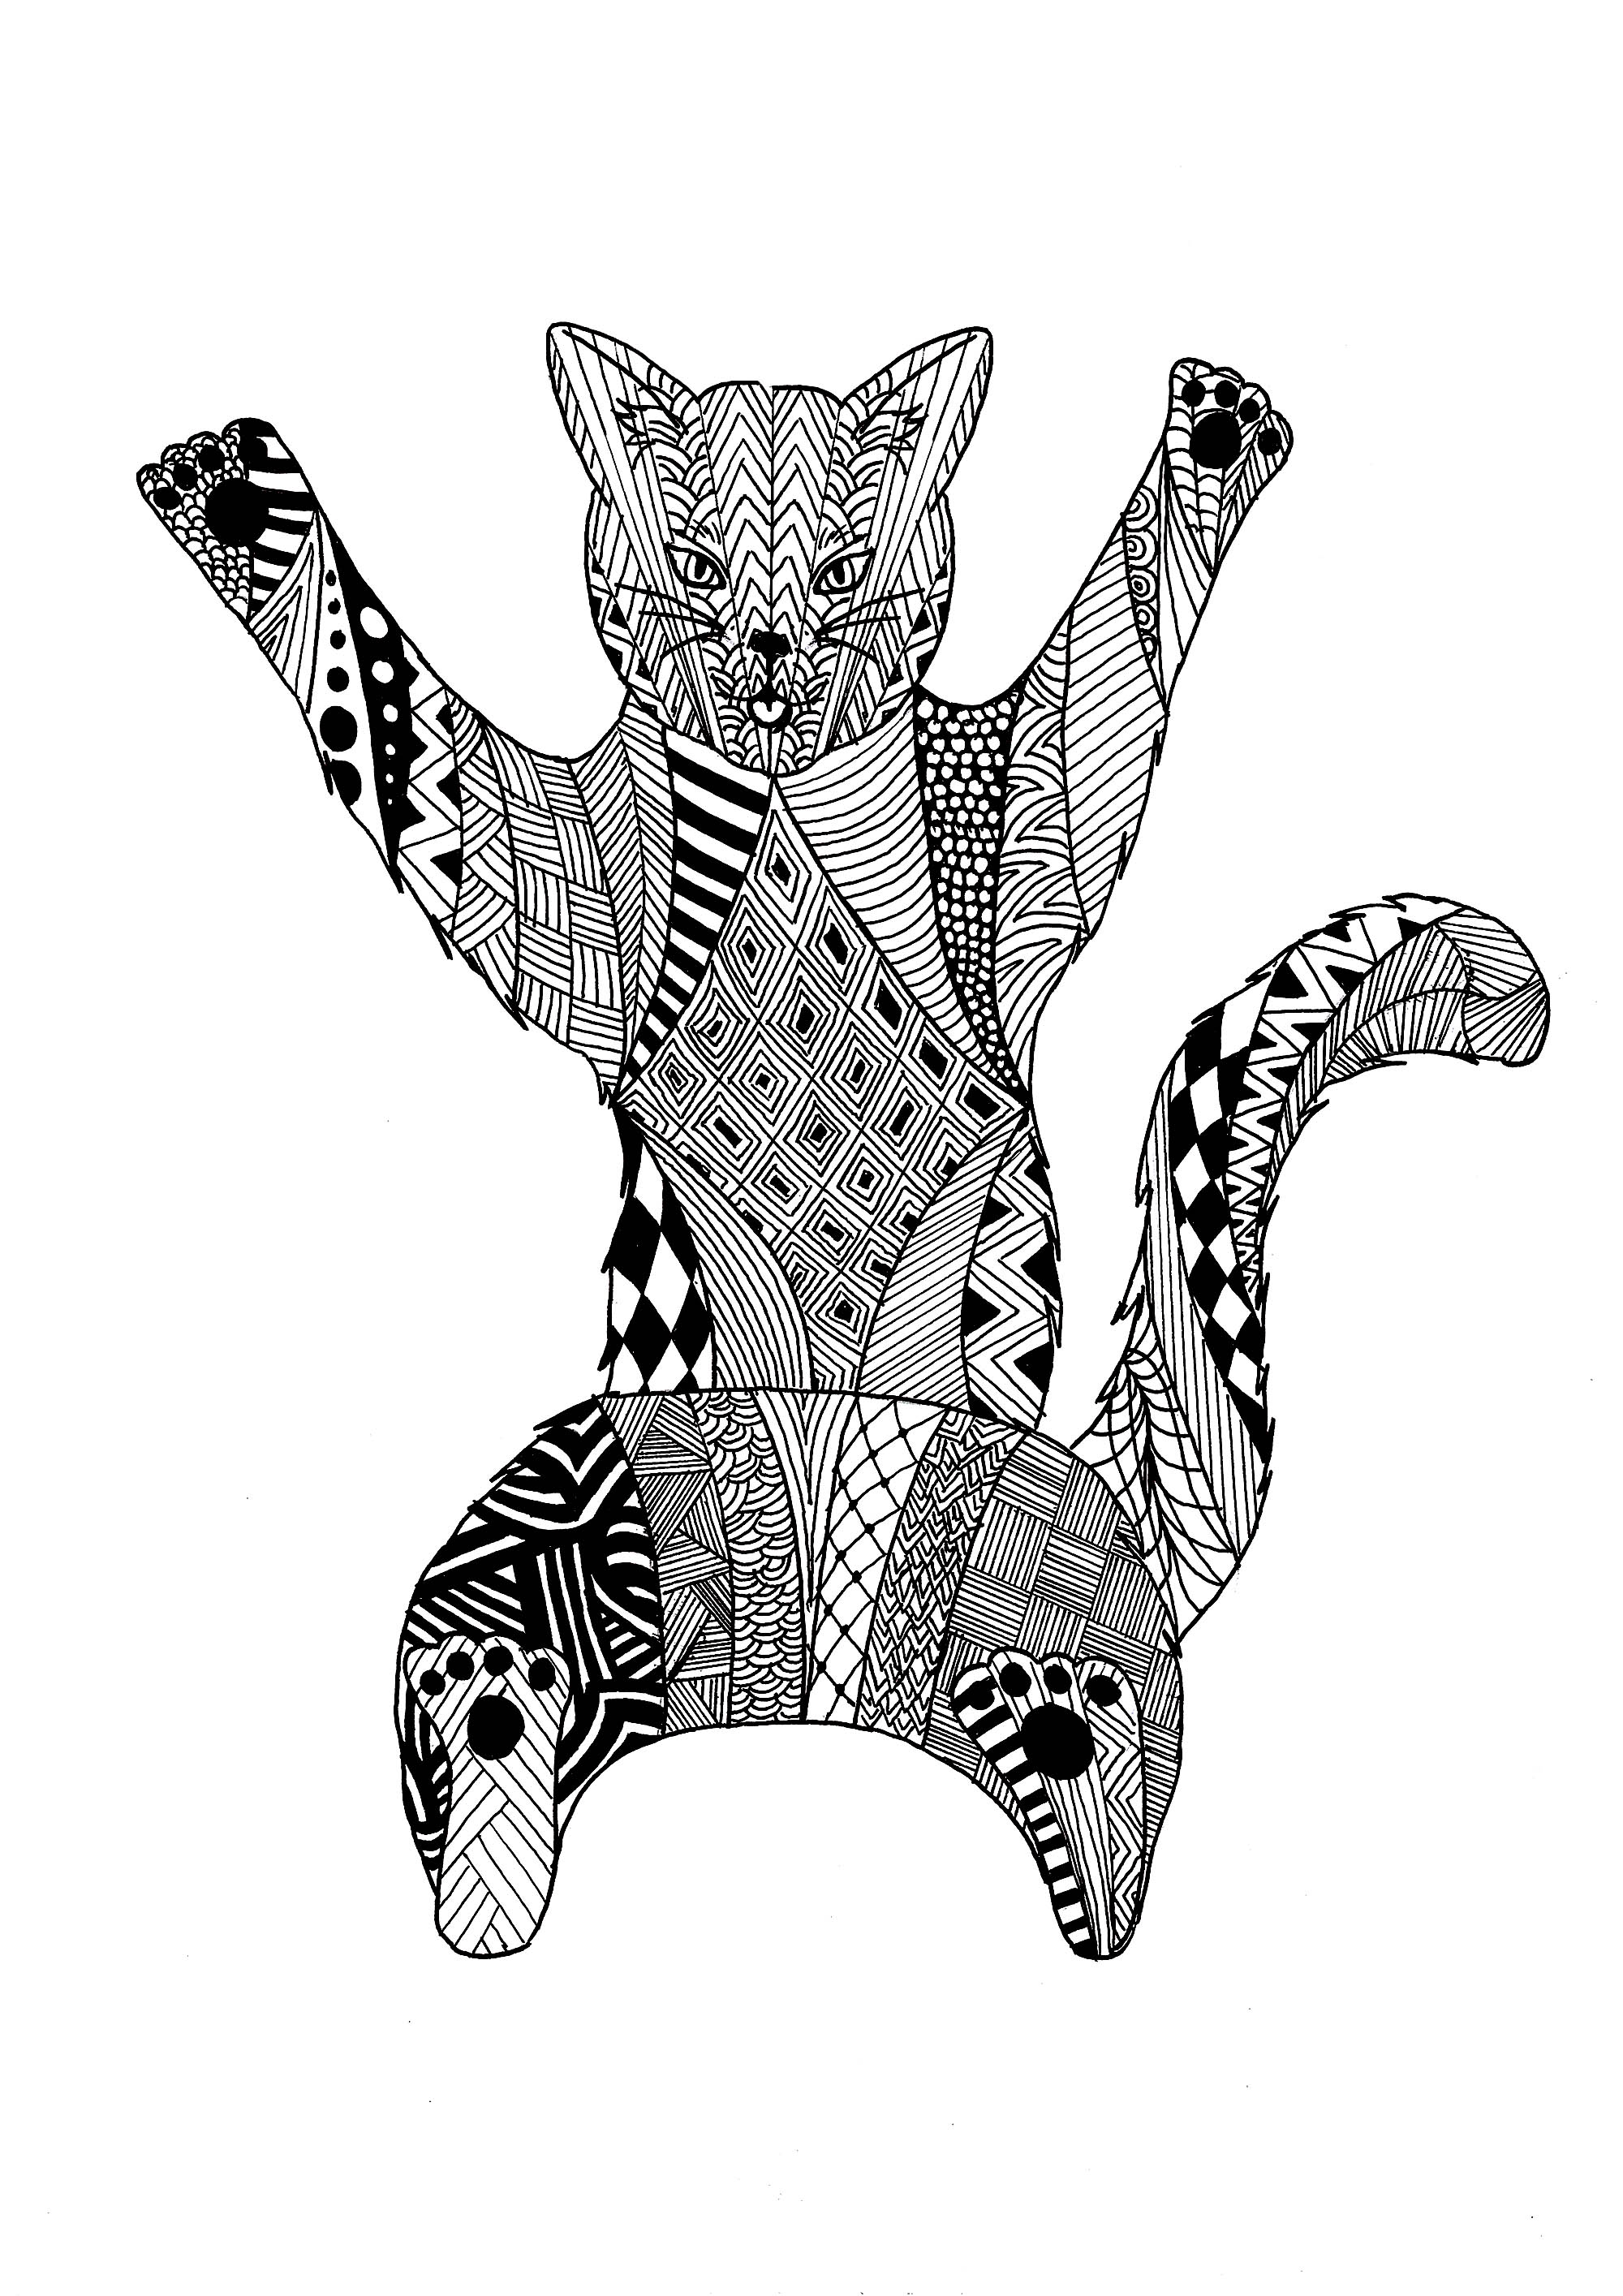 Un bonito gato en pleno salto, con bonitos motivos de Zentangle, Artista : Krissy